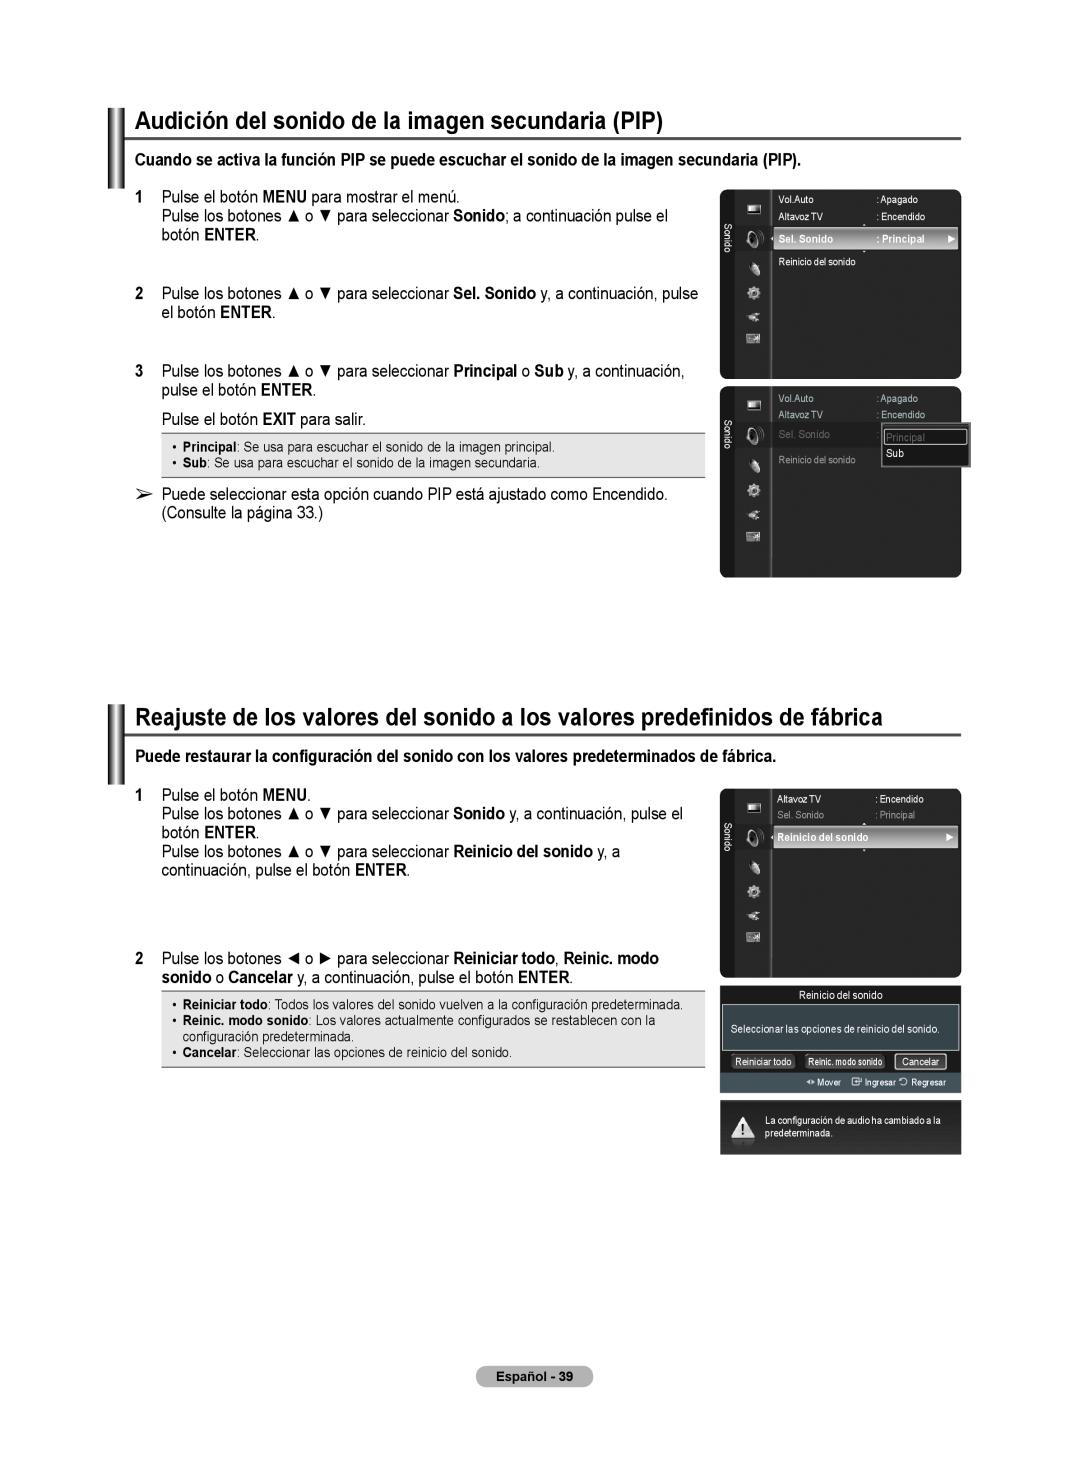 Samsung 510 user manual Audición del sonido de la imagen secundaria PIP, botón ENTER 